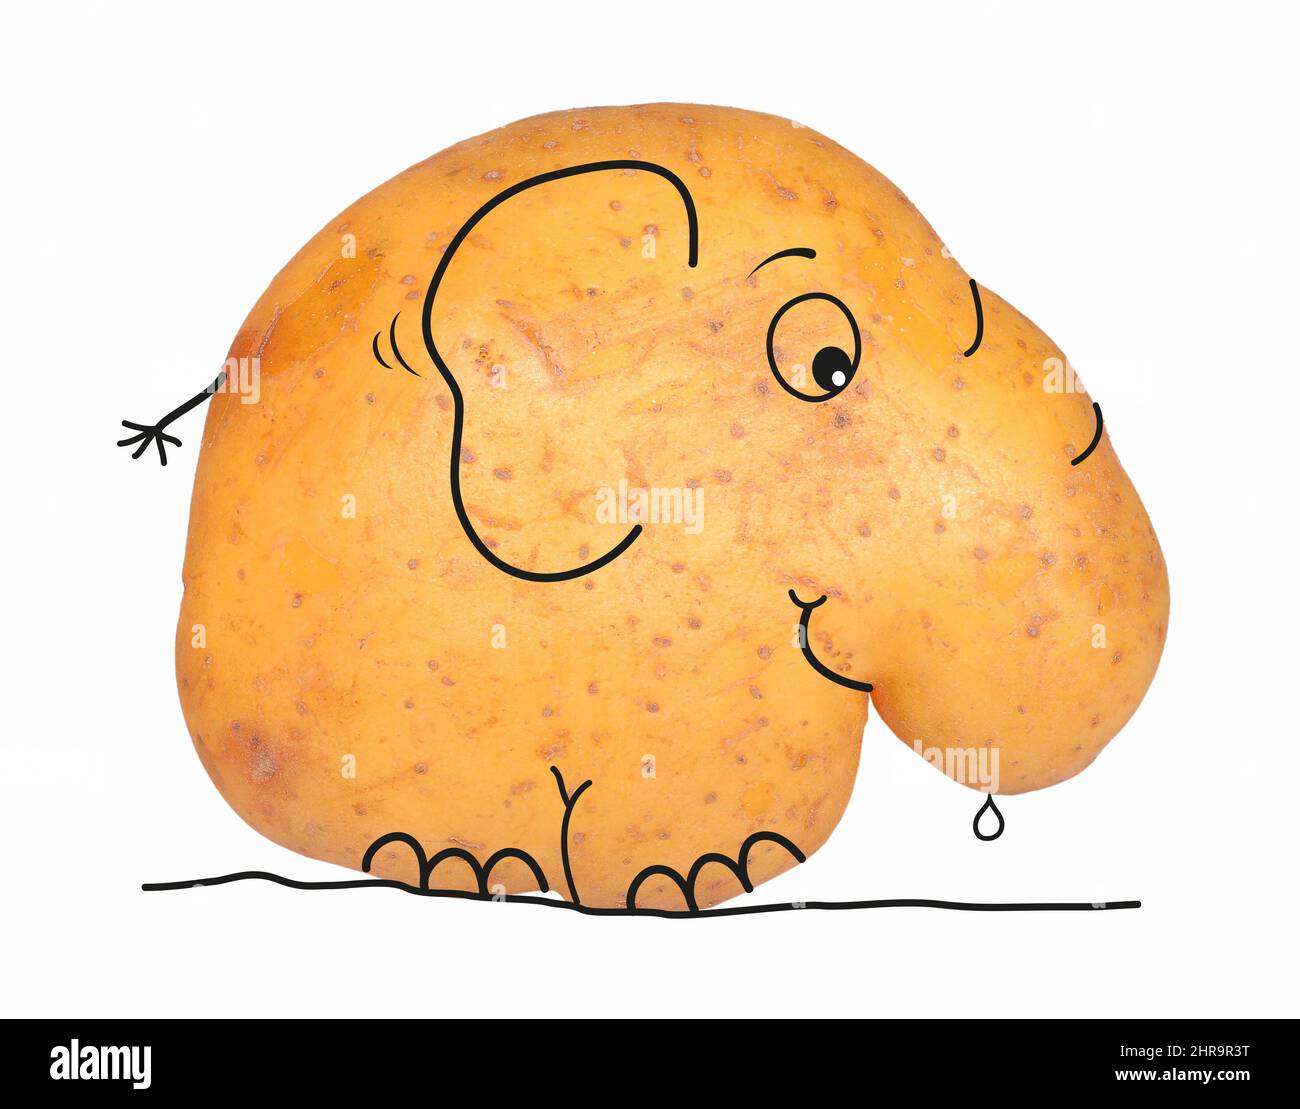 Crooked potato as a cartoon character Stock Photo